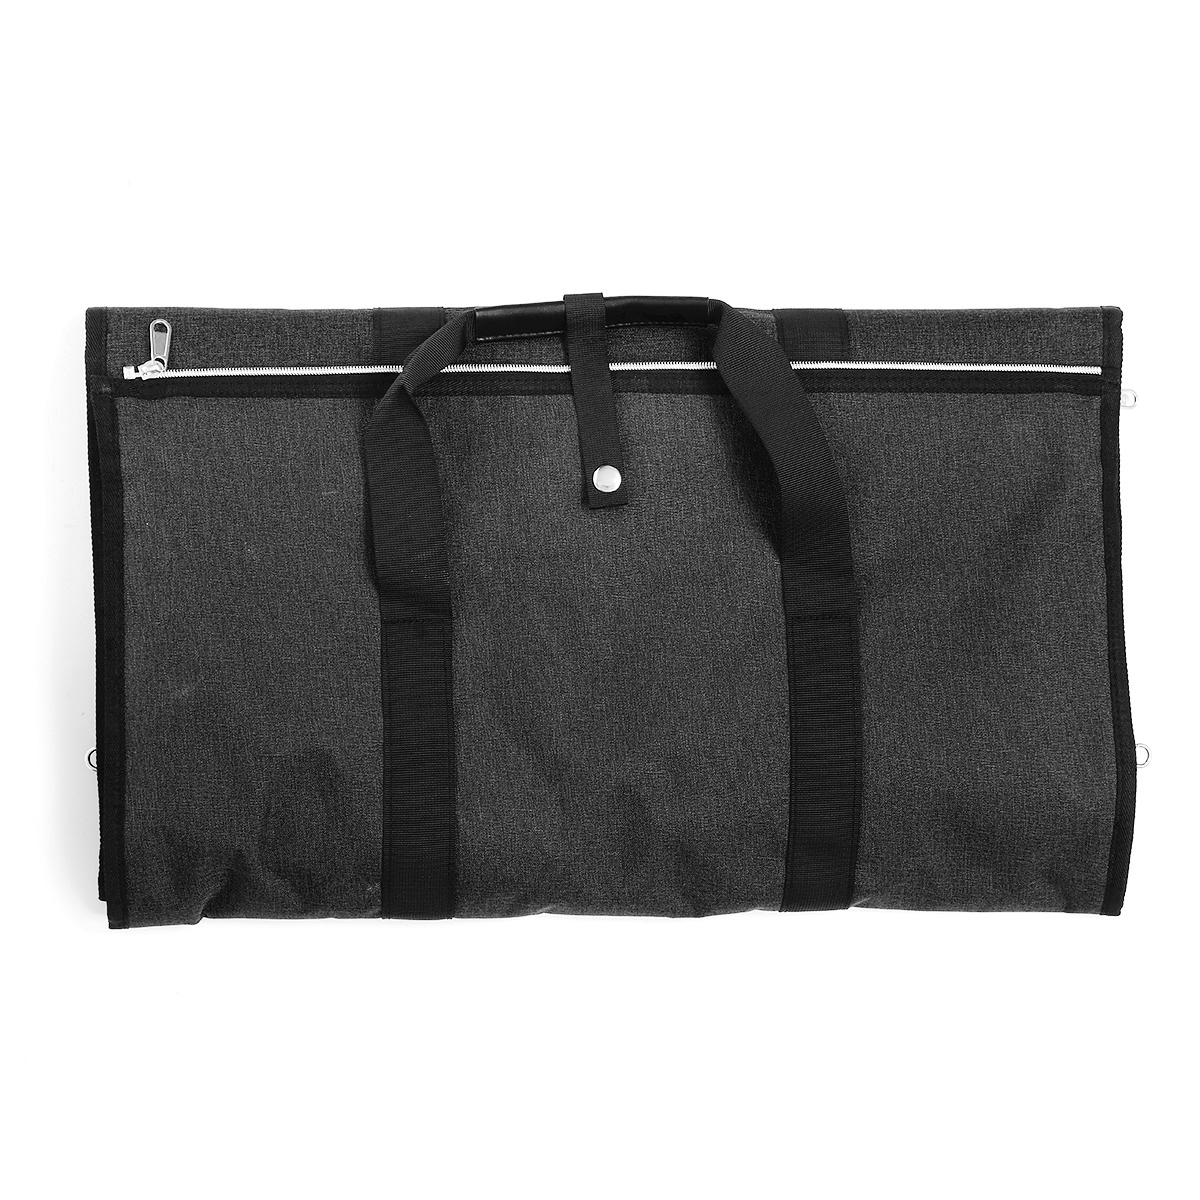 47L-Outdoor-Portable-Travel-Luggage-Bag-Suit-Dress-Garment-Storage-Handbag-Sports-Gym-Bag-1553950-7